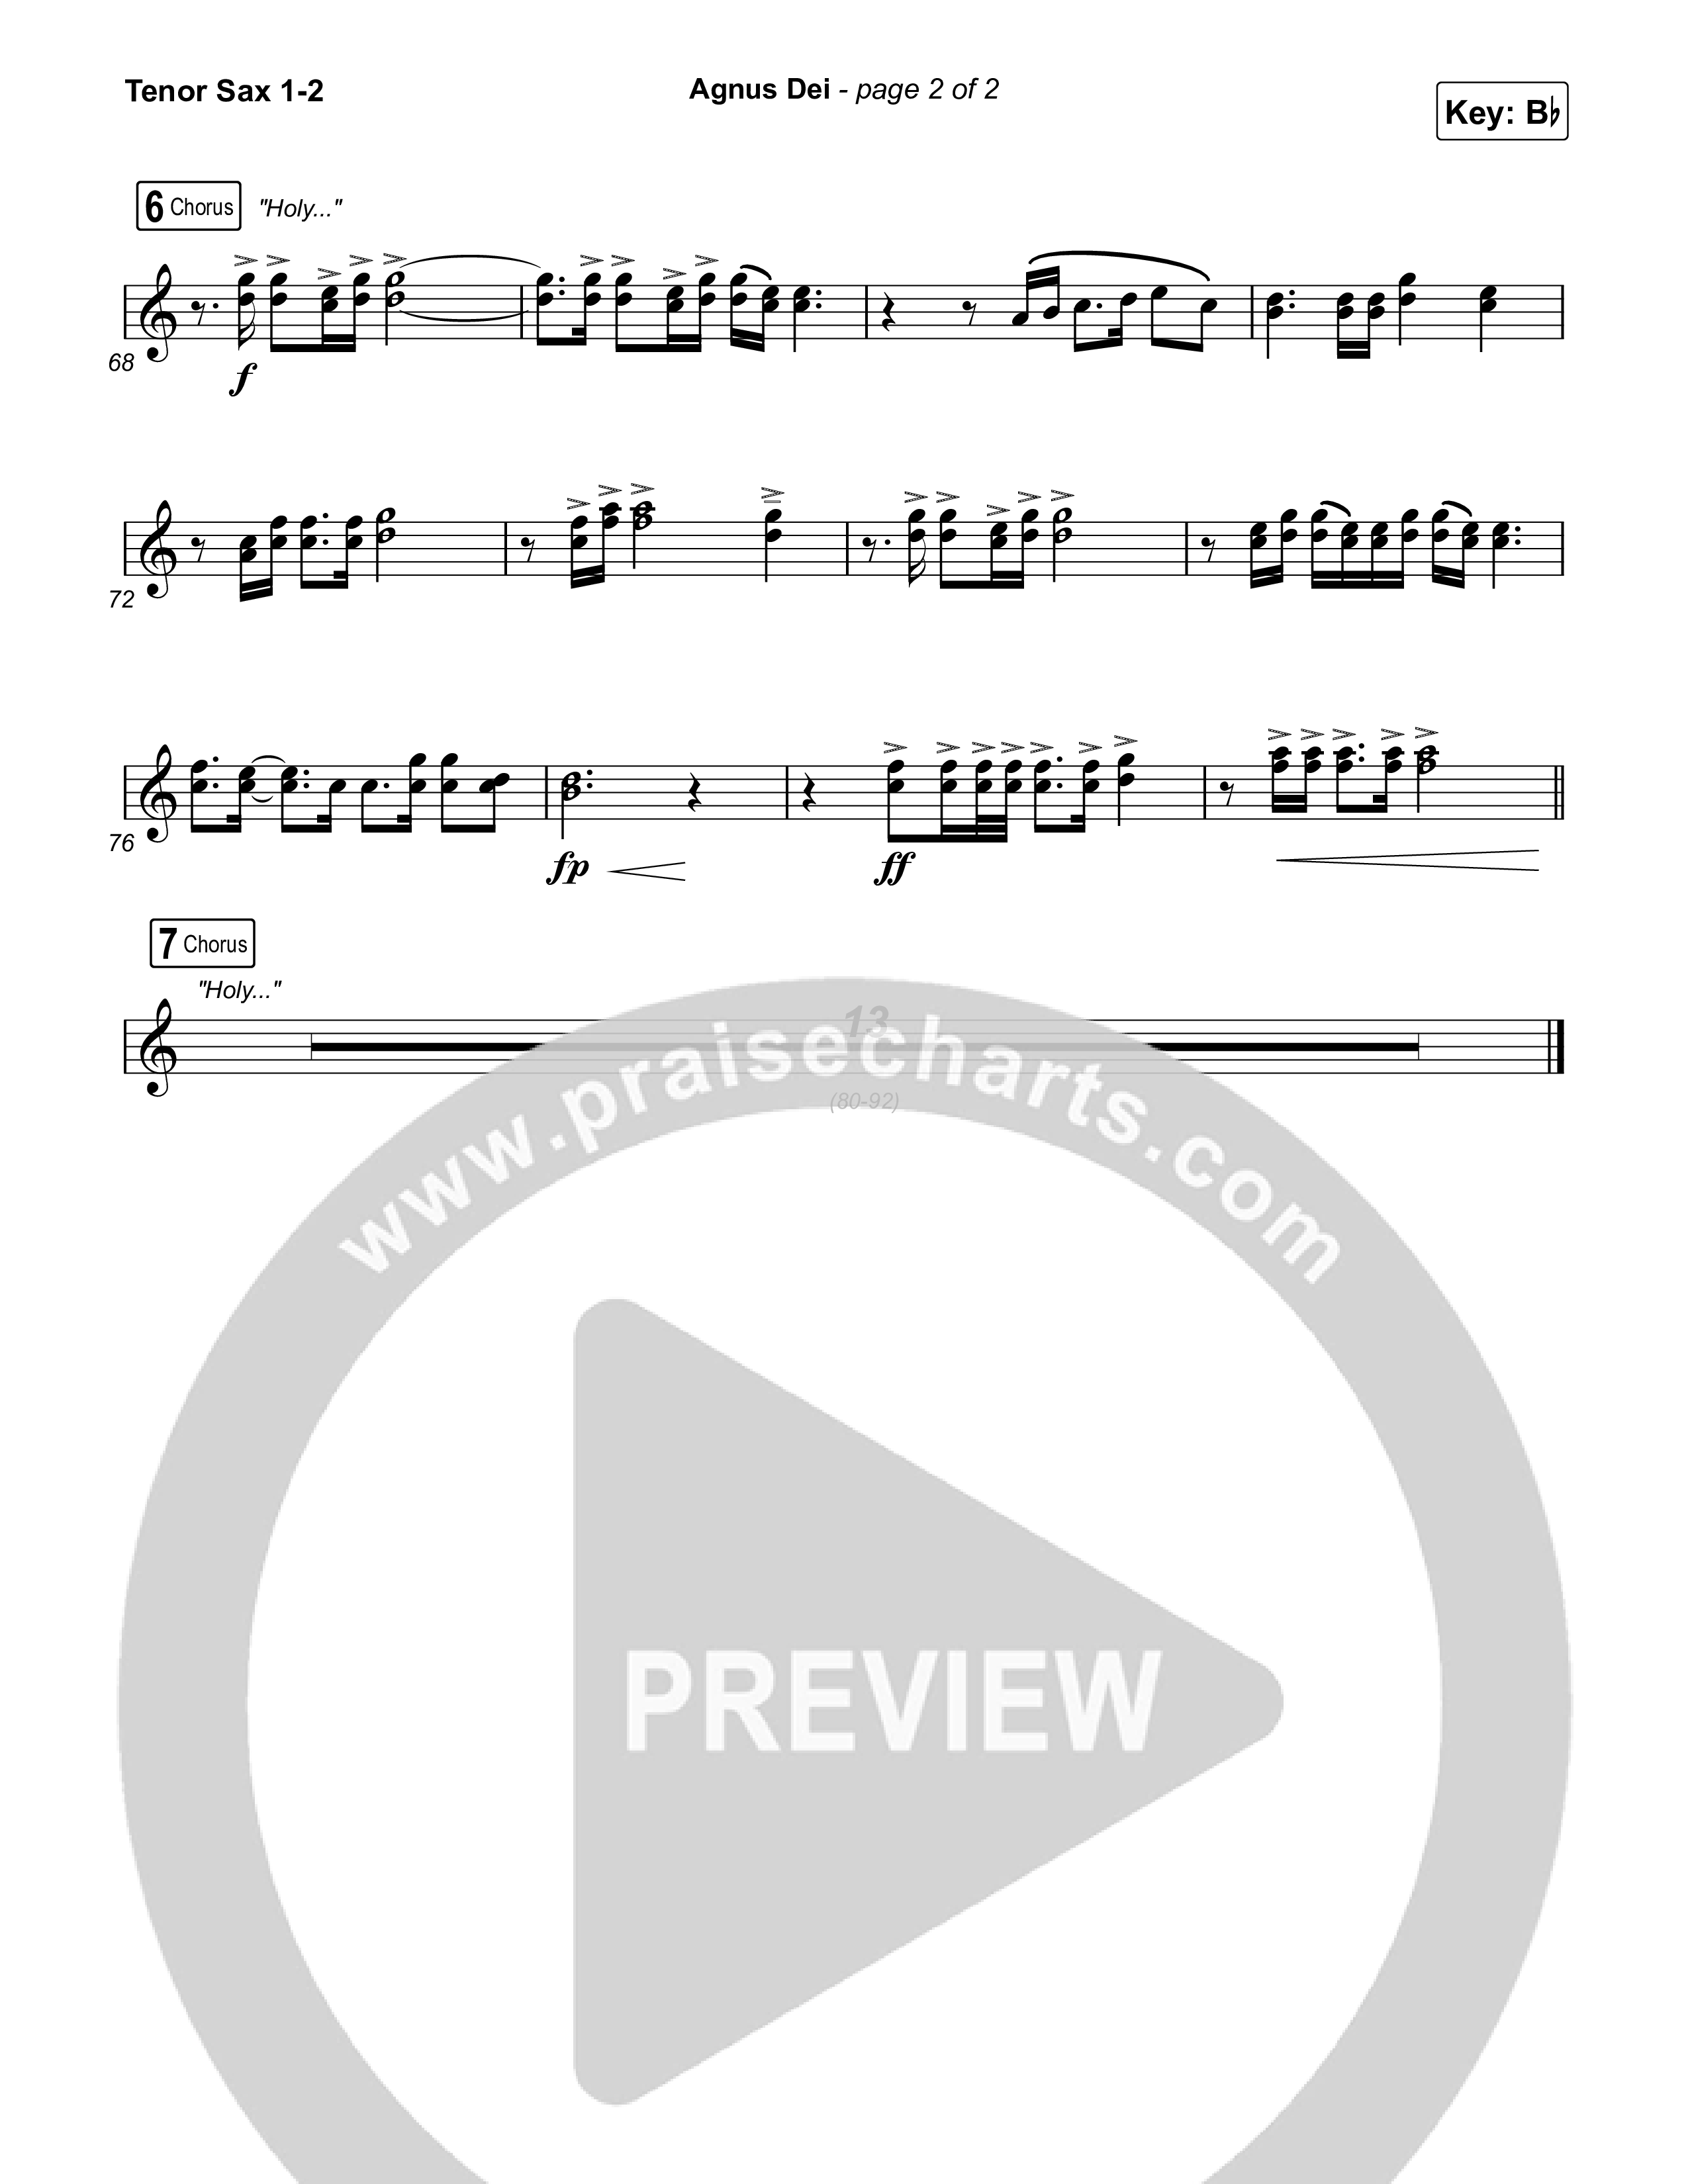 Agnus Dei (Live From Passion 2024) Tenor Sax 1,2 (Passion / Kristian Stanfill)